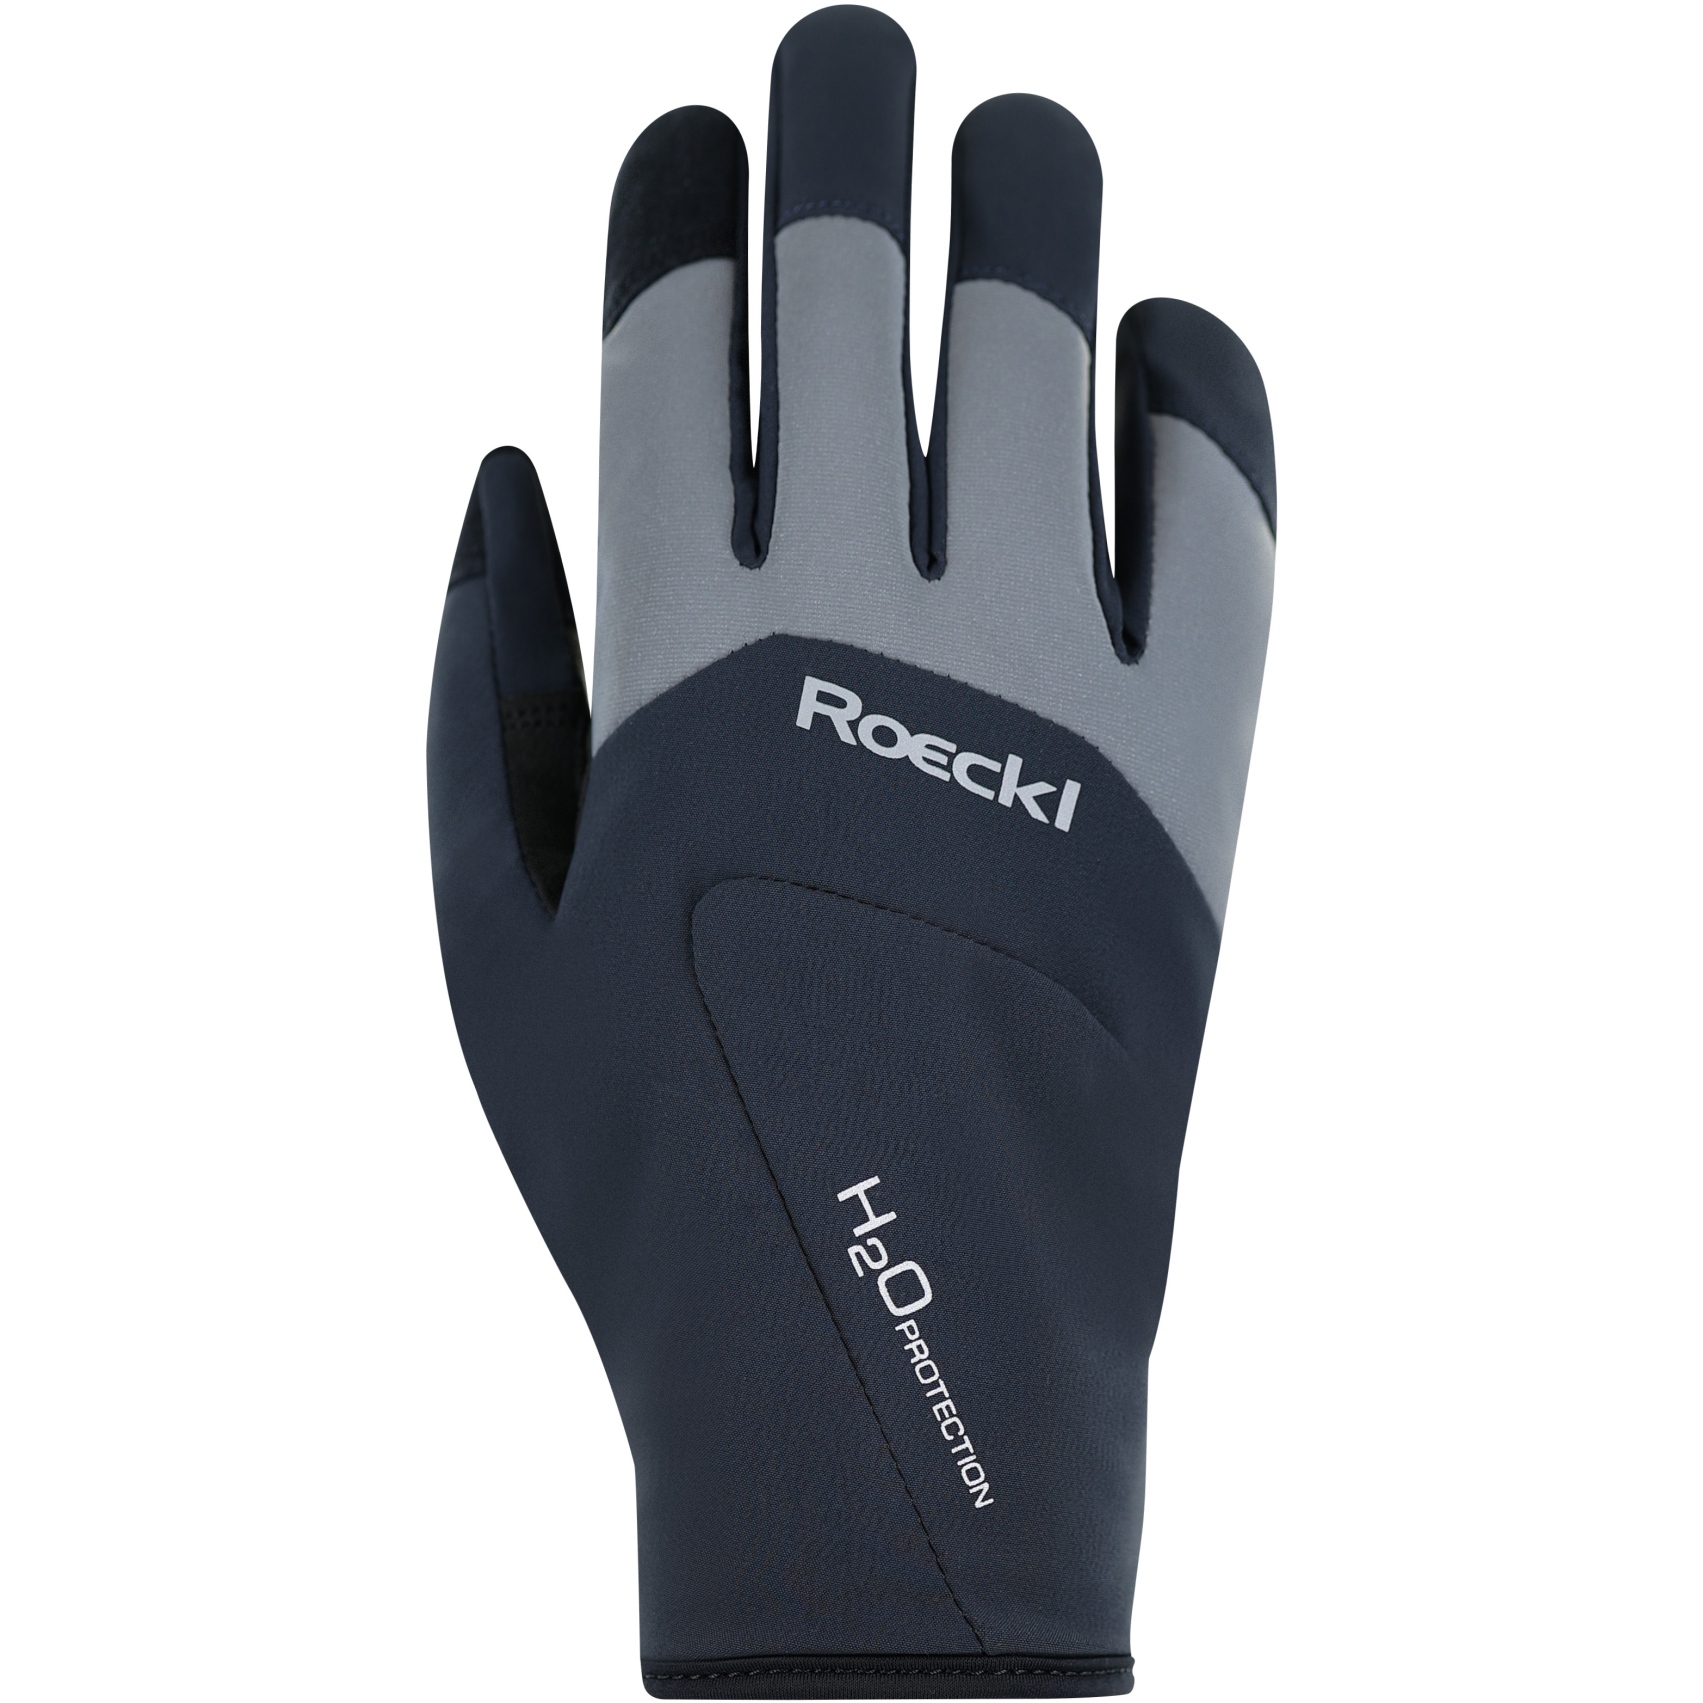 Productfoto van Roeckl Sports Rapallo Fietshandschoenen - dress black 9200